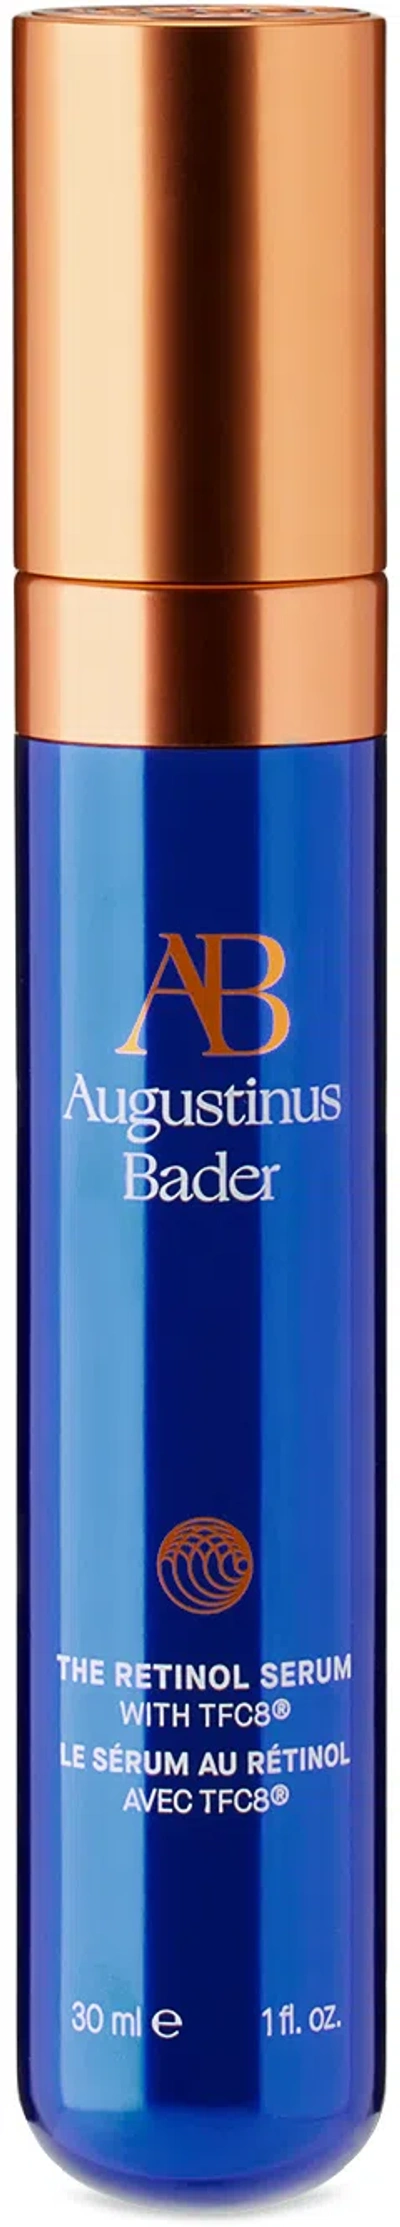 Augustinus Bader The Retinol Serum, 15 ml In White